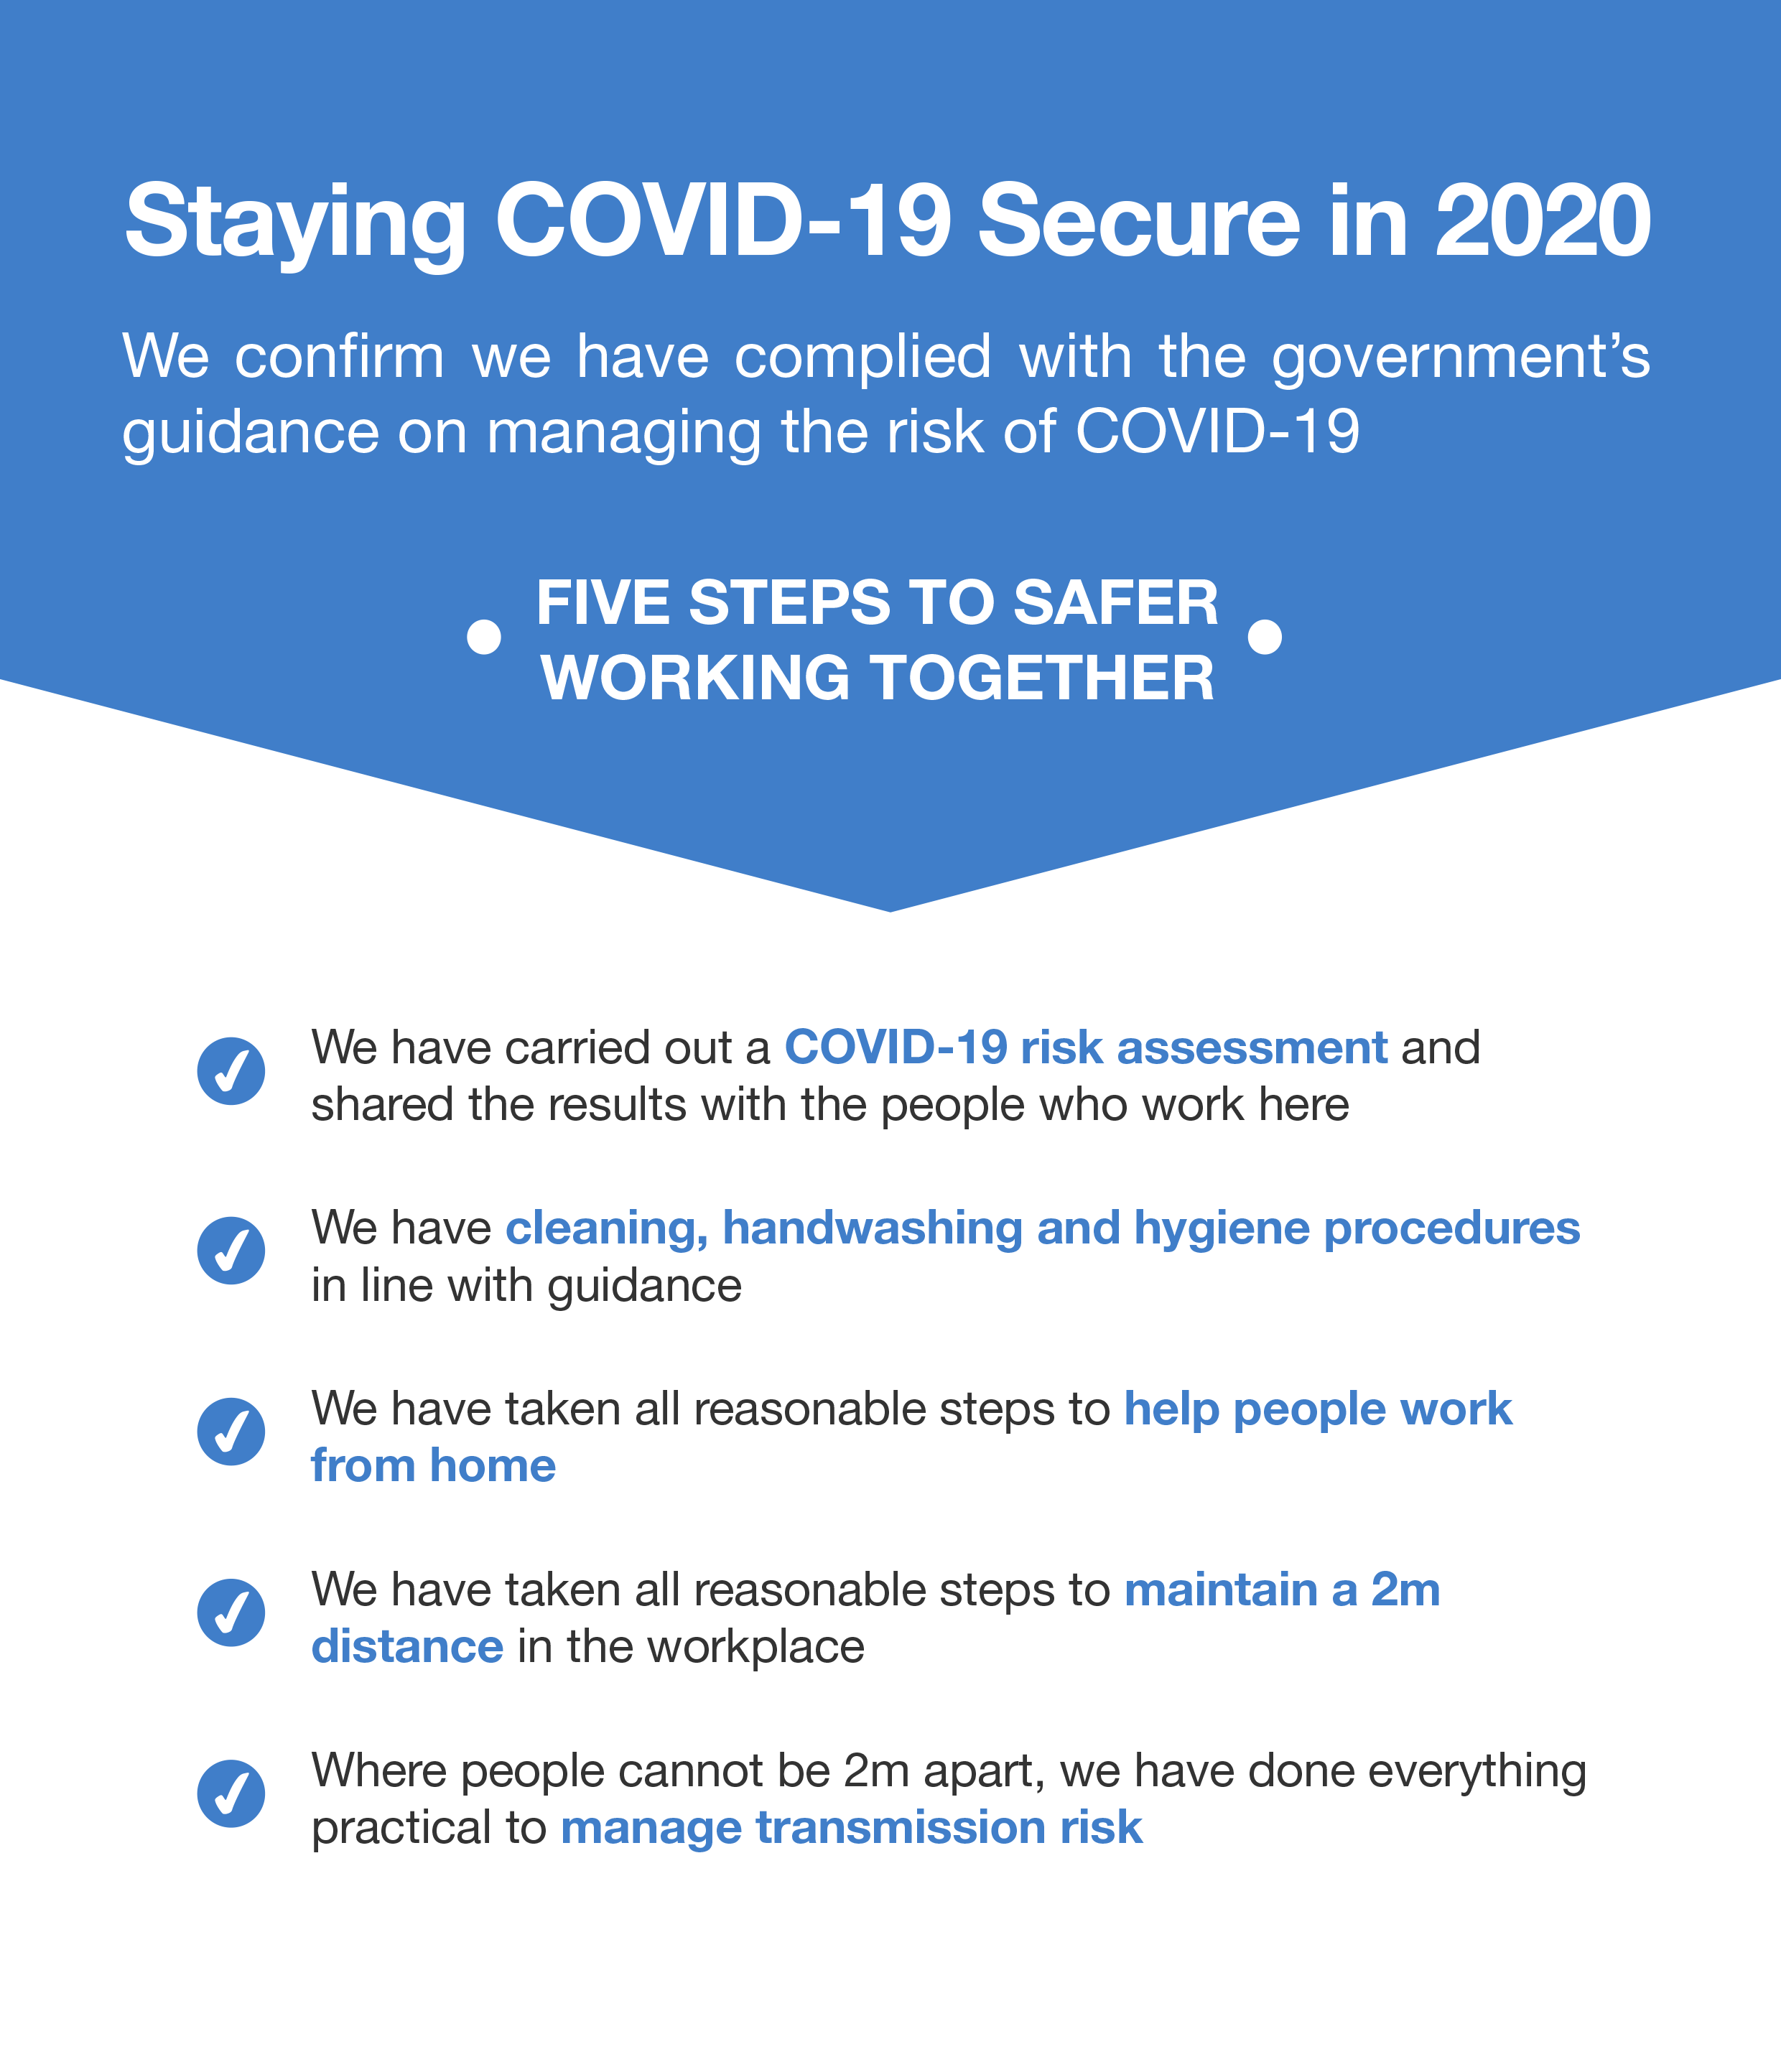 Covid-19 Compliance Certificate